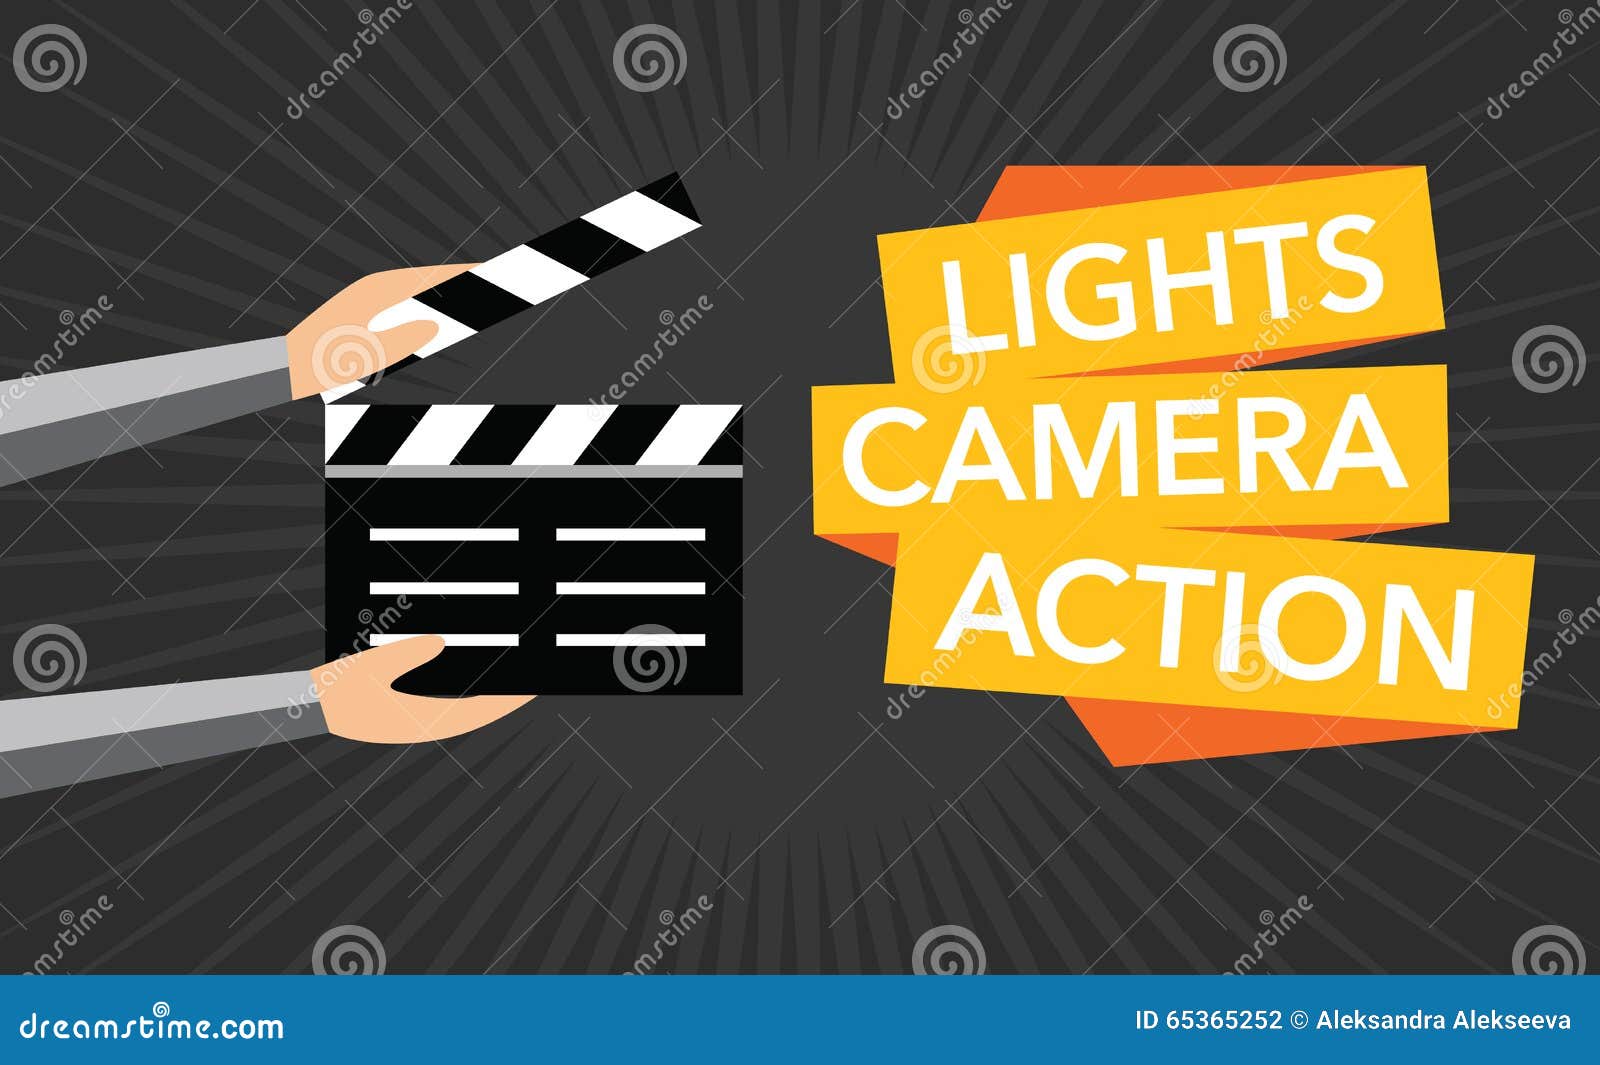 cinema lights camera action flat 